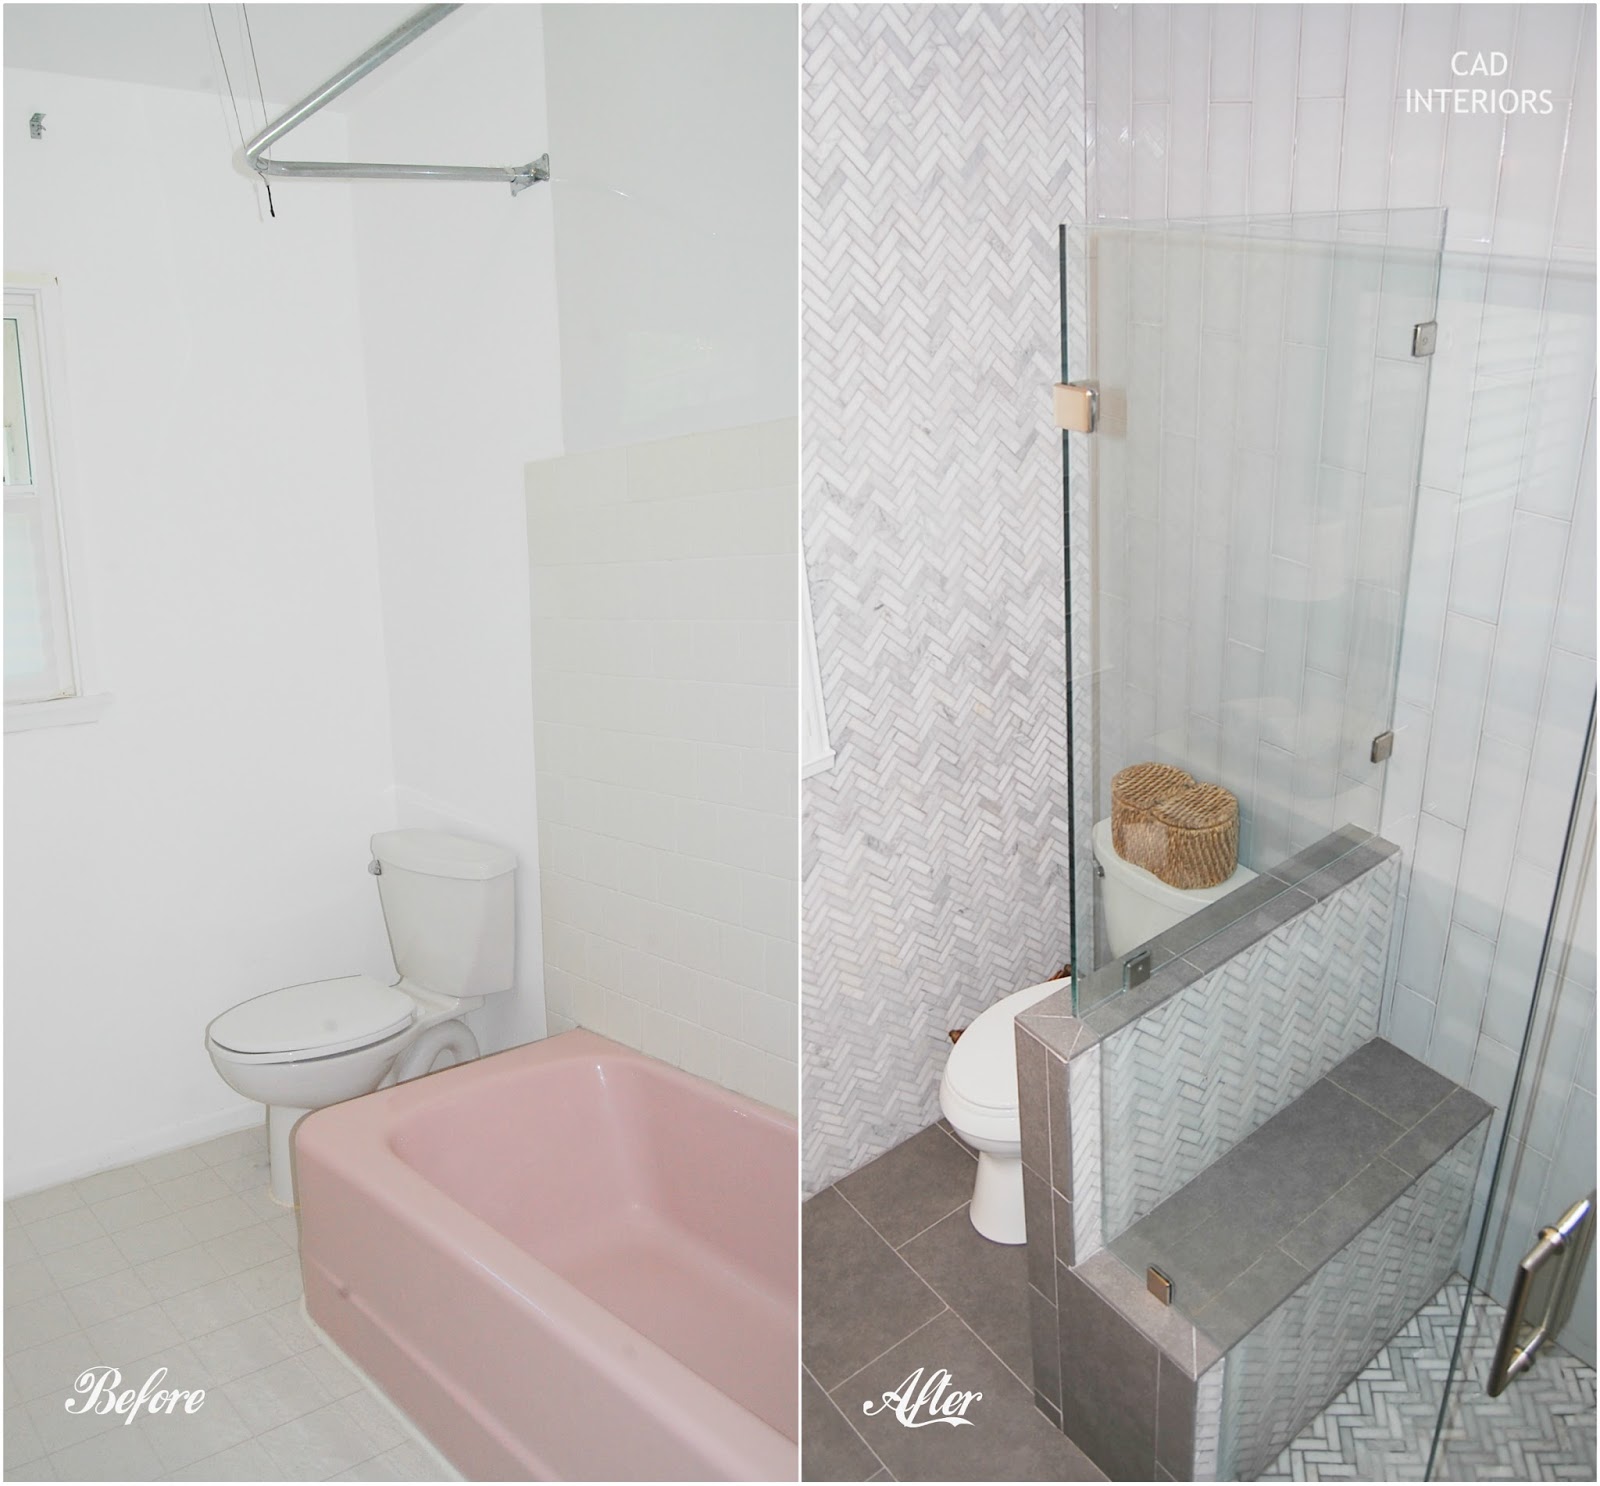 CAD INTERIORS main bathroom renovation modern transitional bathroom interior design